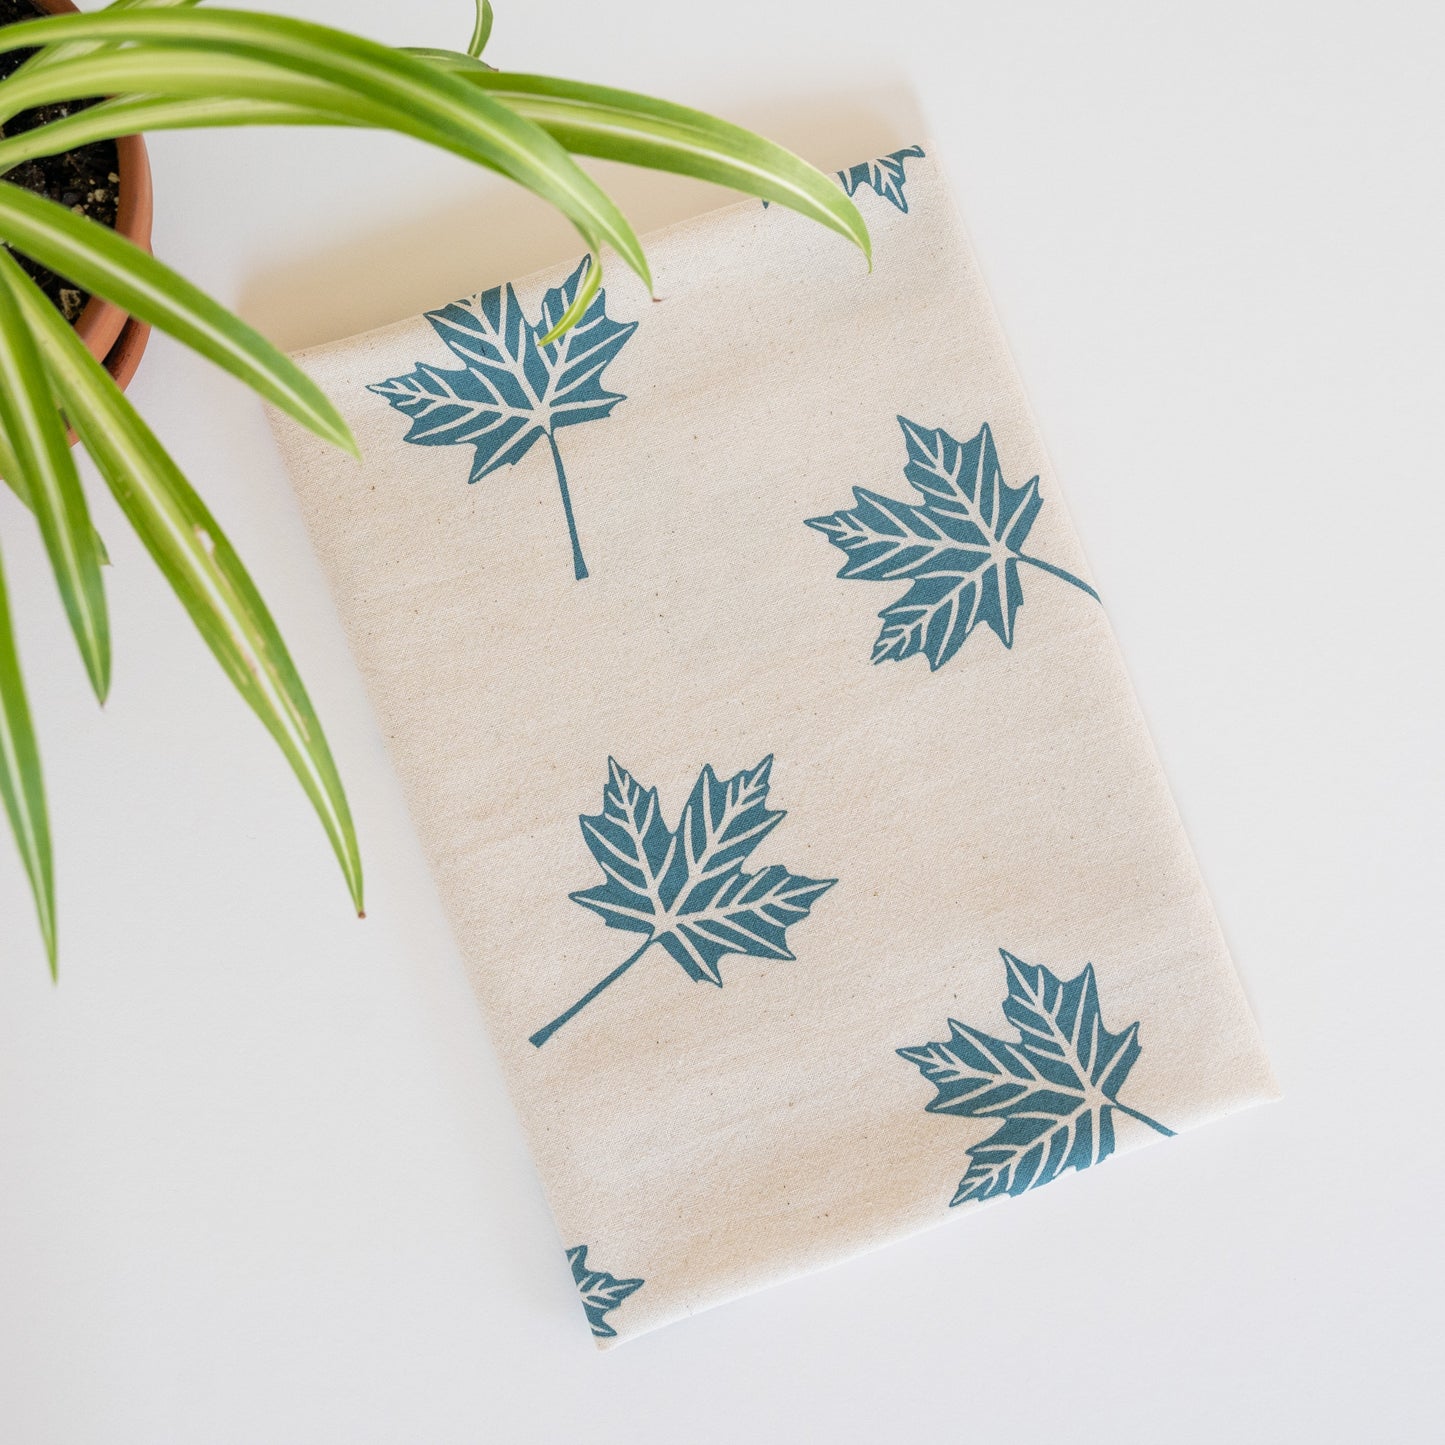 Blue maple leaf cotton tea towel with potted plant